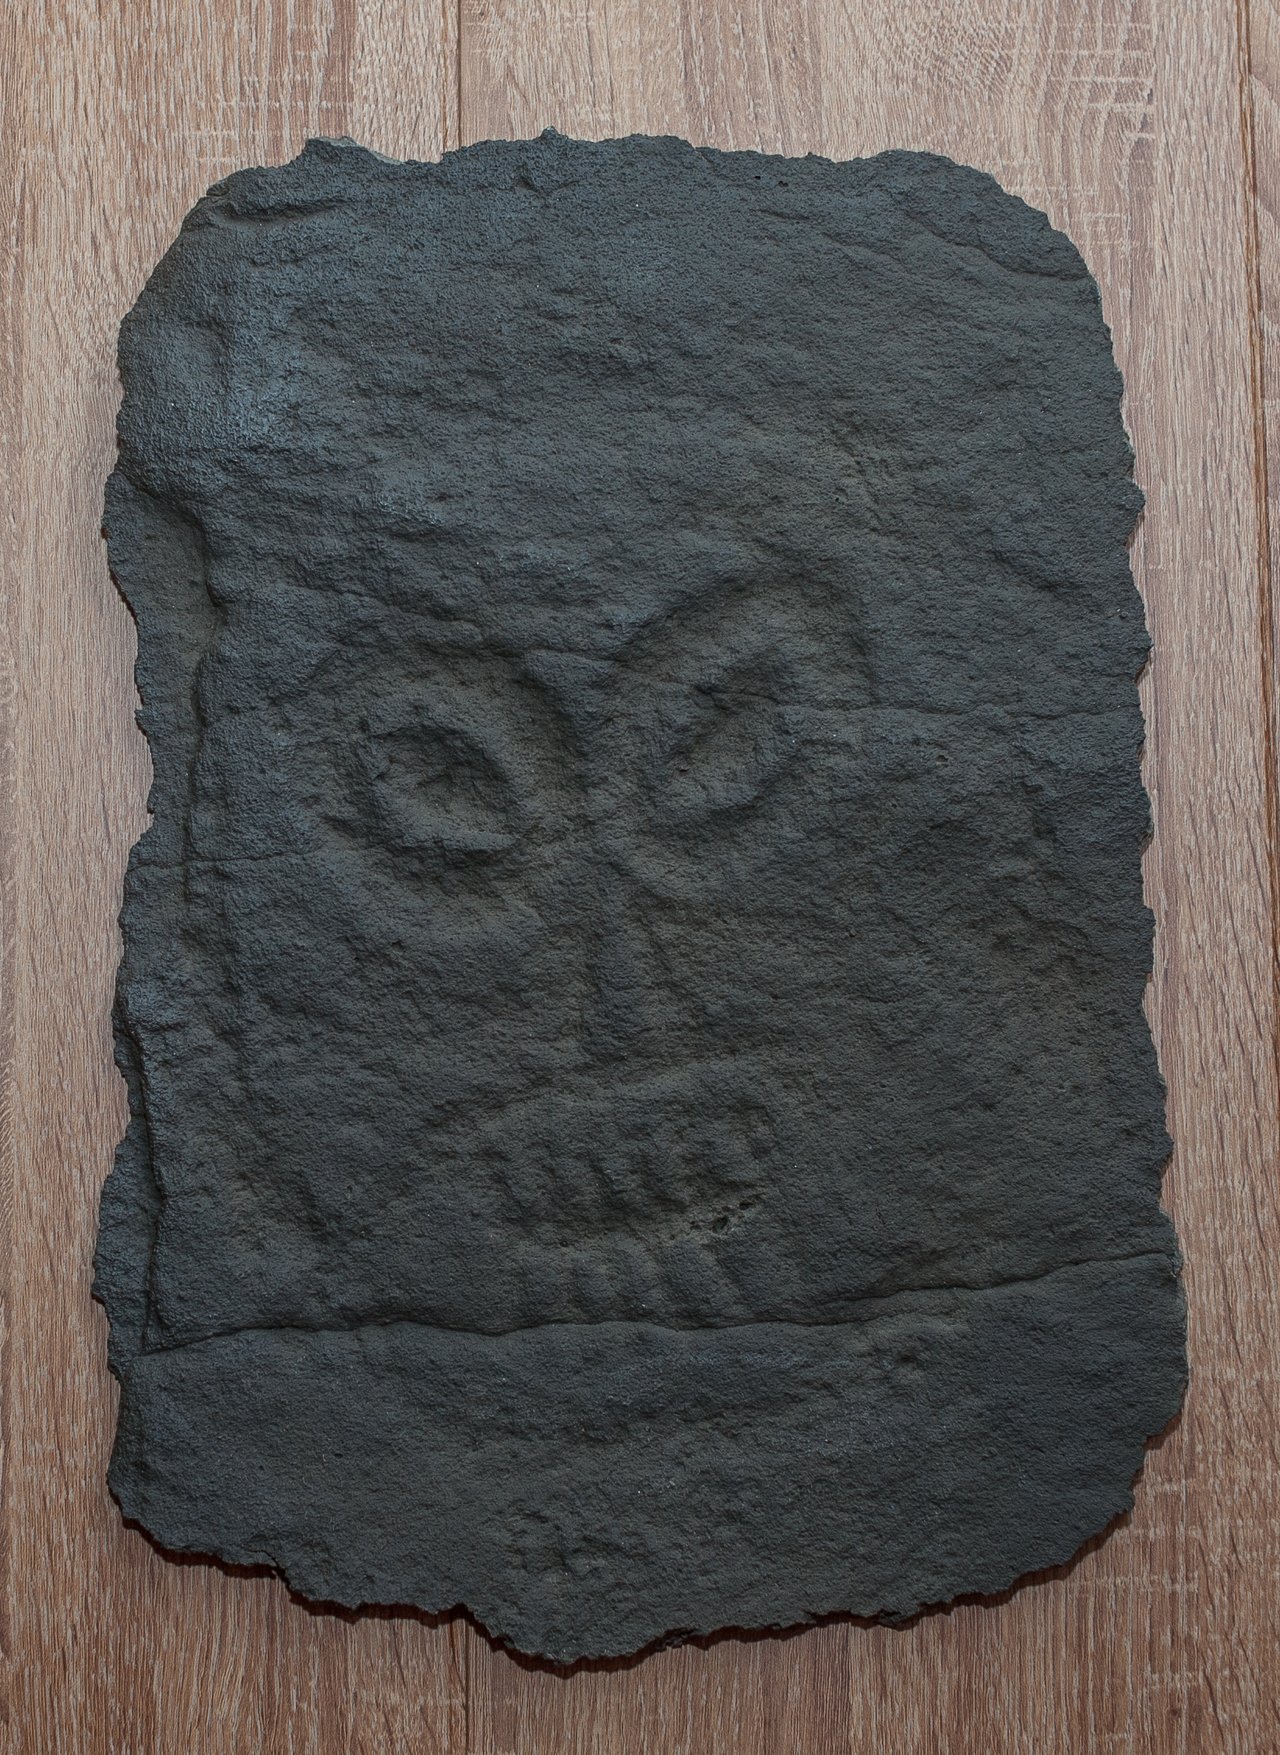 012 Mask 2 (petroglyph copy).jpg